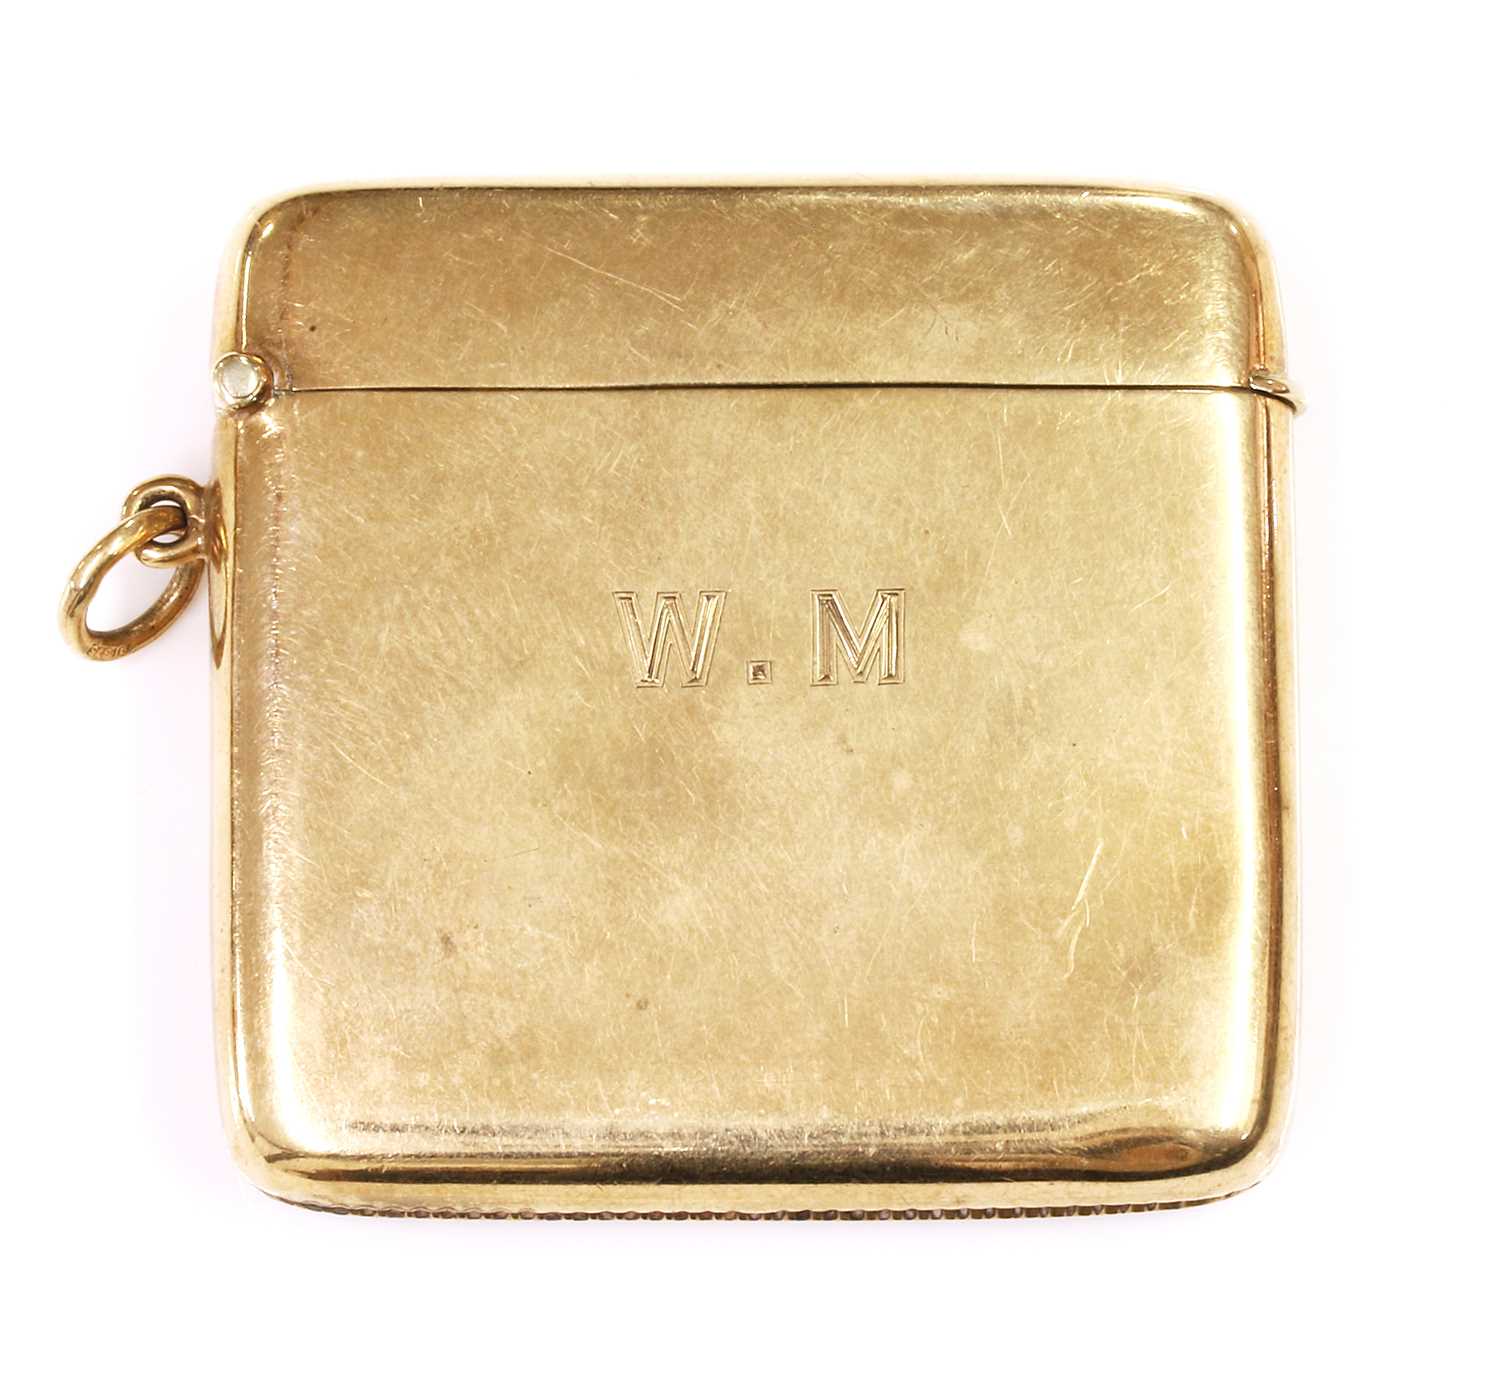 Lot 127 - A 9ct gold cushion shaped vesta case, by Horace Woodward & Co. Ltd.